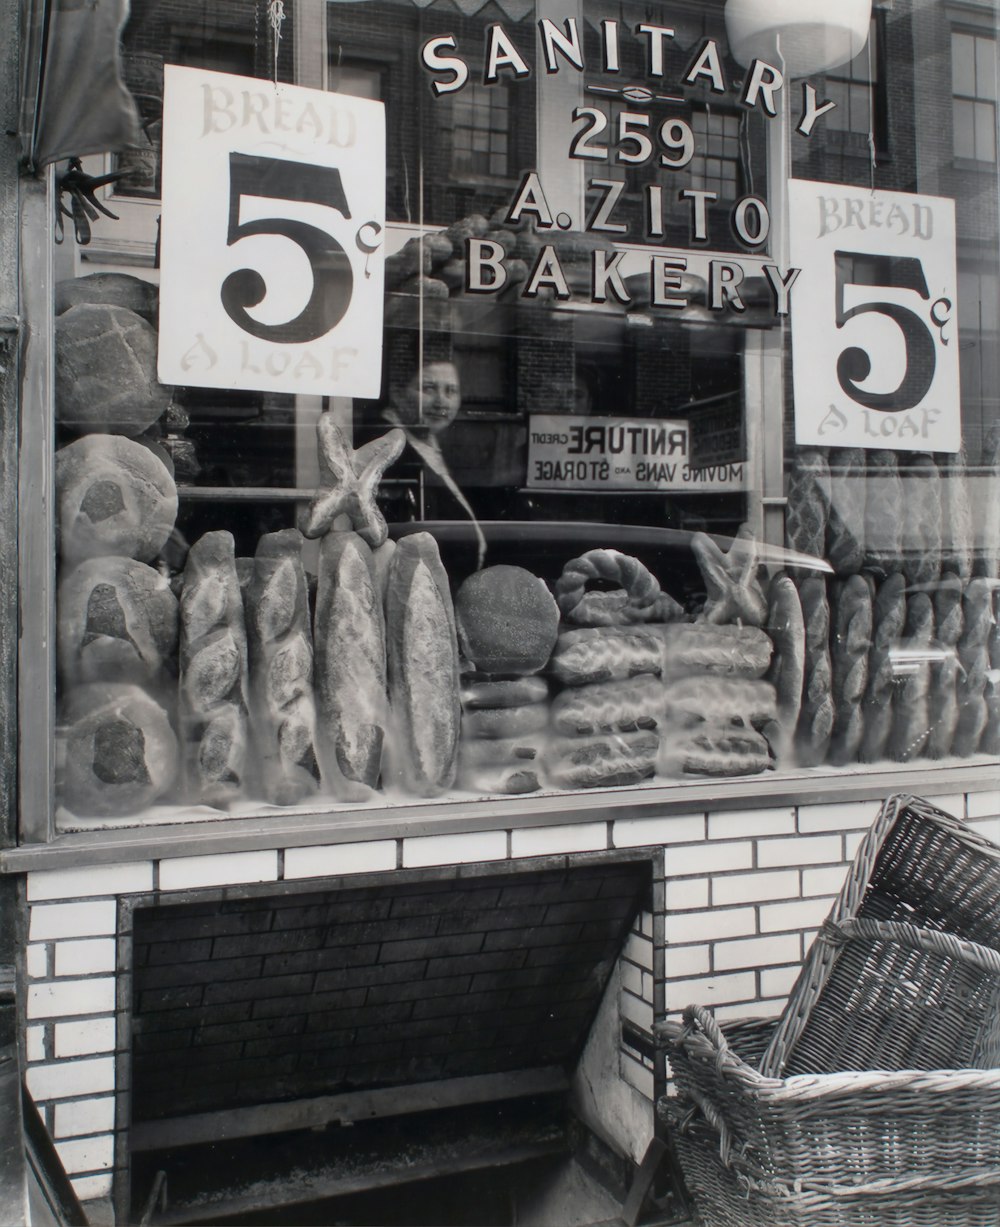 bread displayed in bakery store window